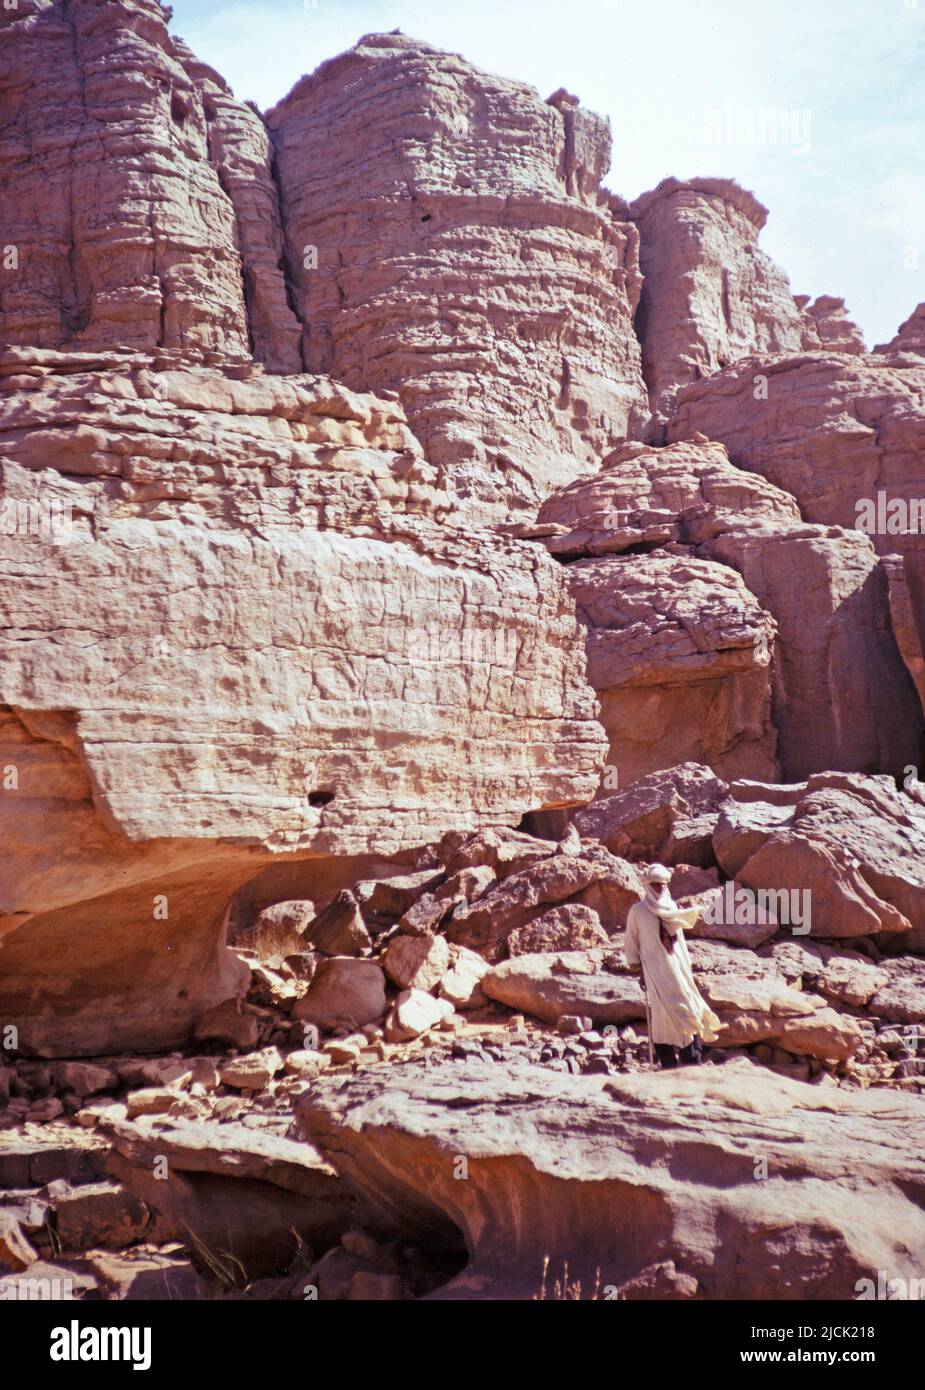 Taureq guide standing by cave dwelling entrance, Tassili plateau, Algeria, North Africa 1973 Tassili N'Ajjer National Park Stock Photo